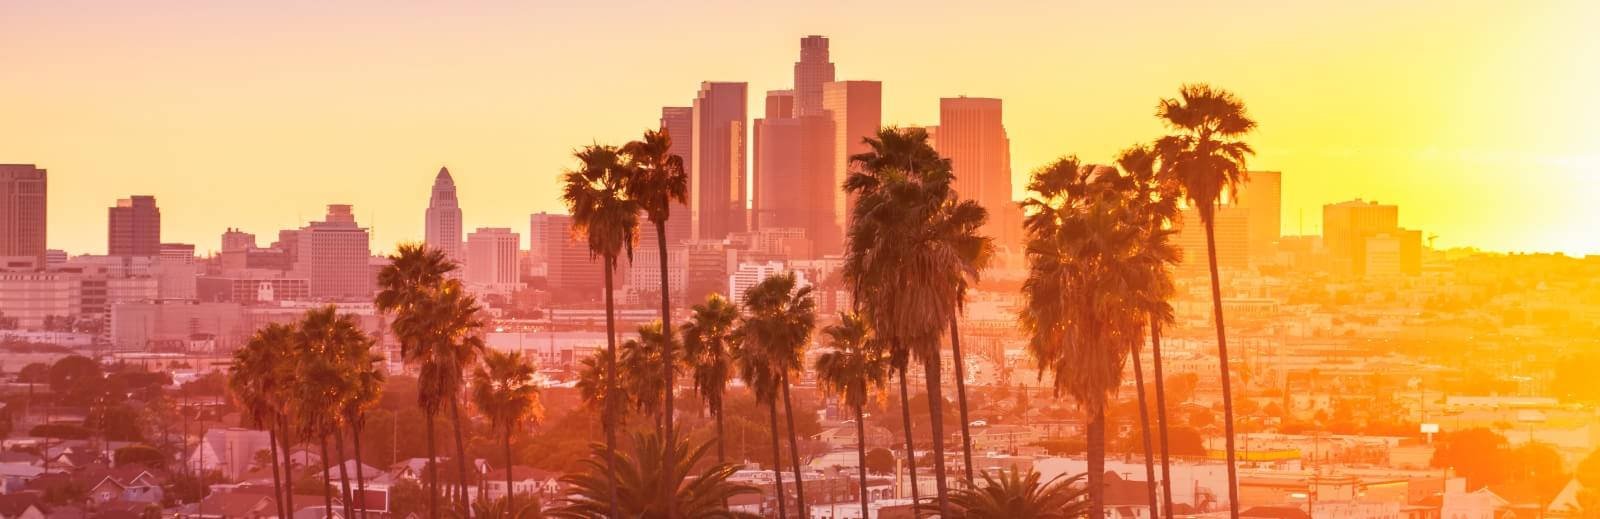 Los Angeles City Skyline During Sunset